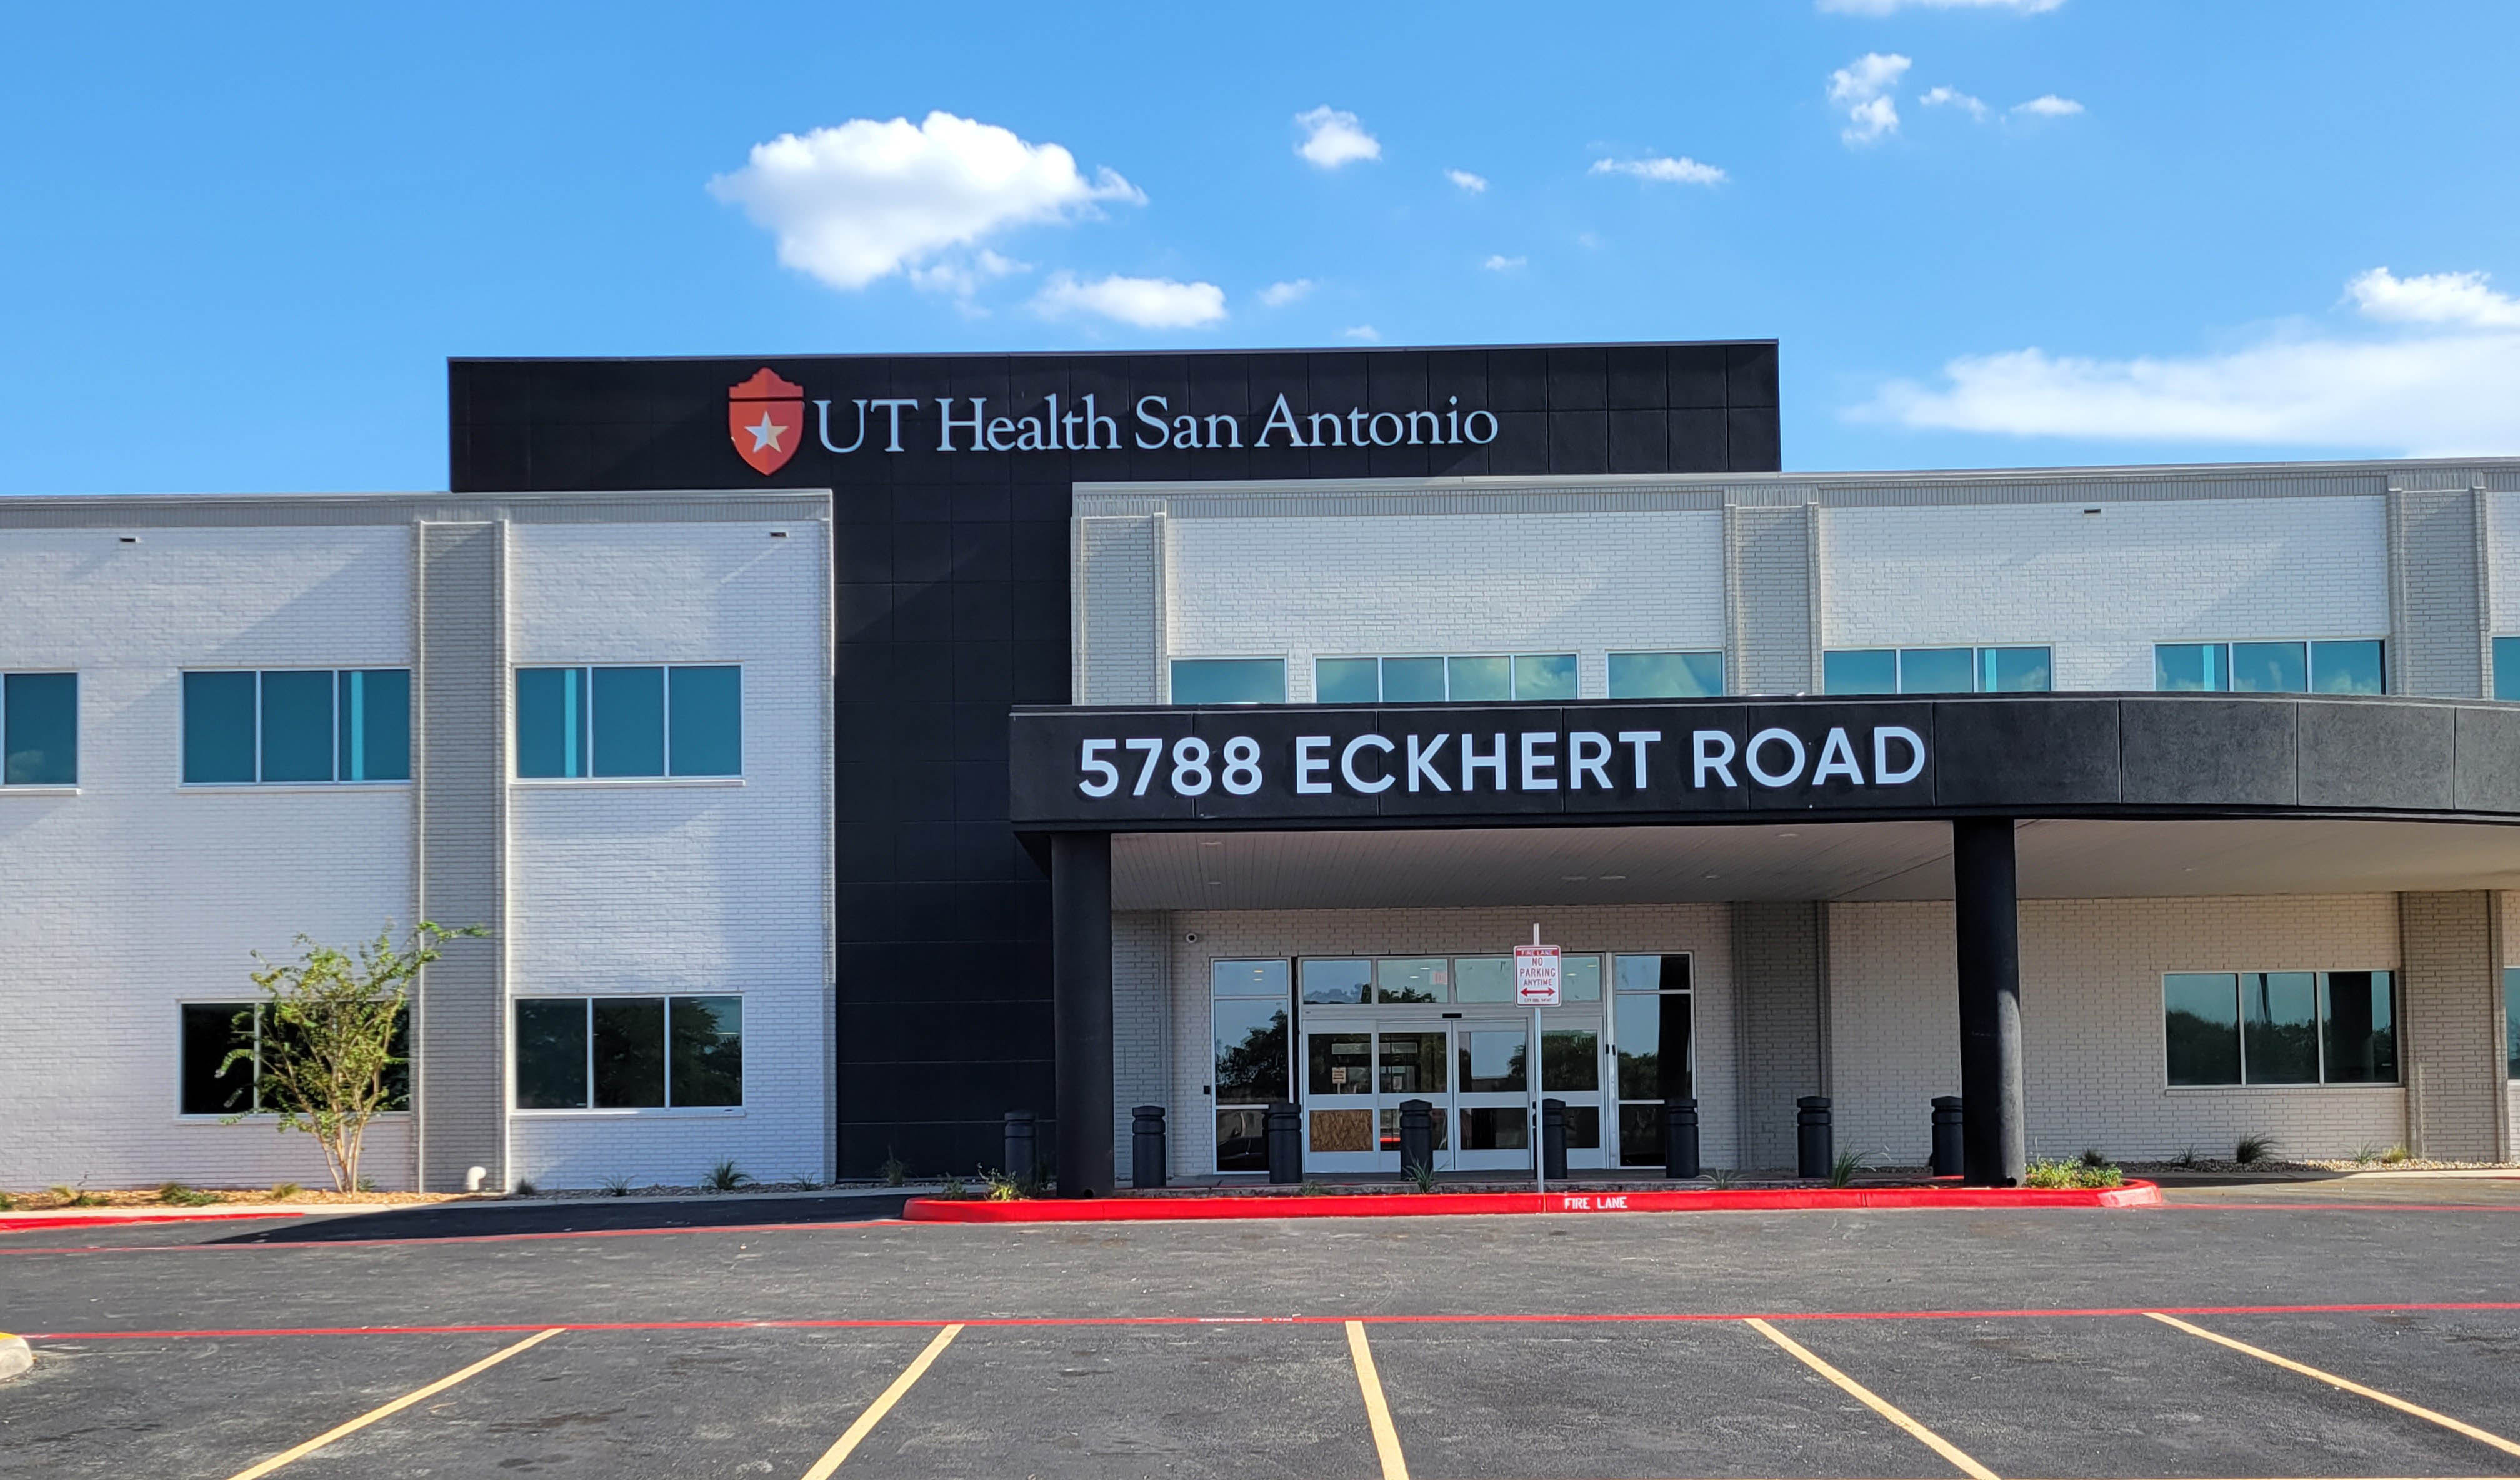 UT Health San Antonio Behavioral Health and Wellness Center